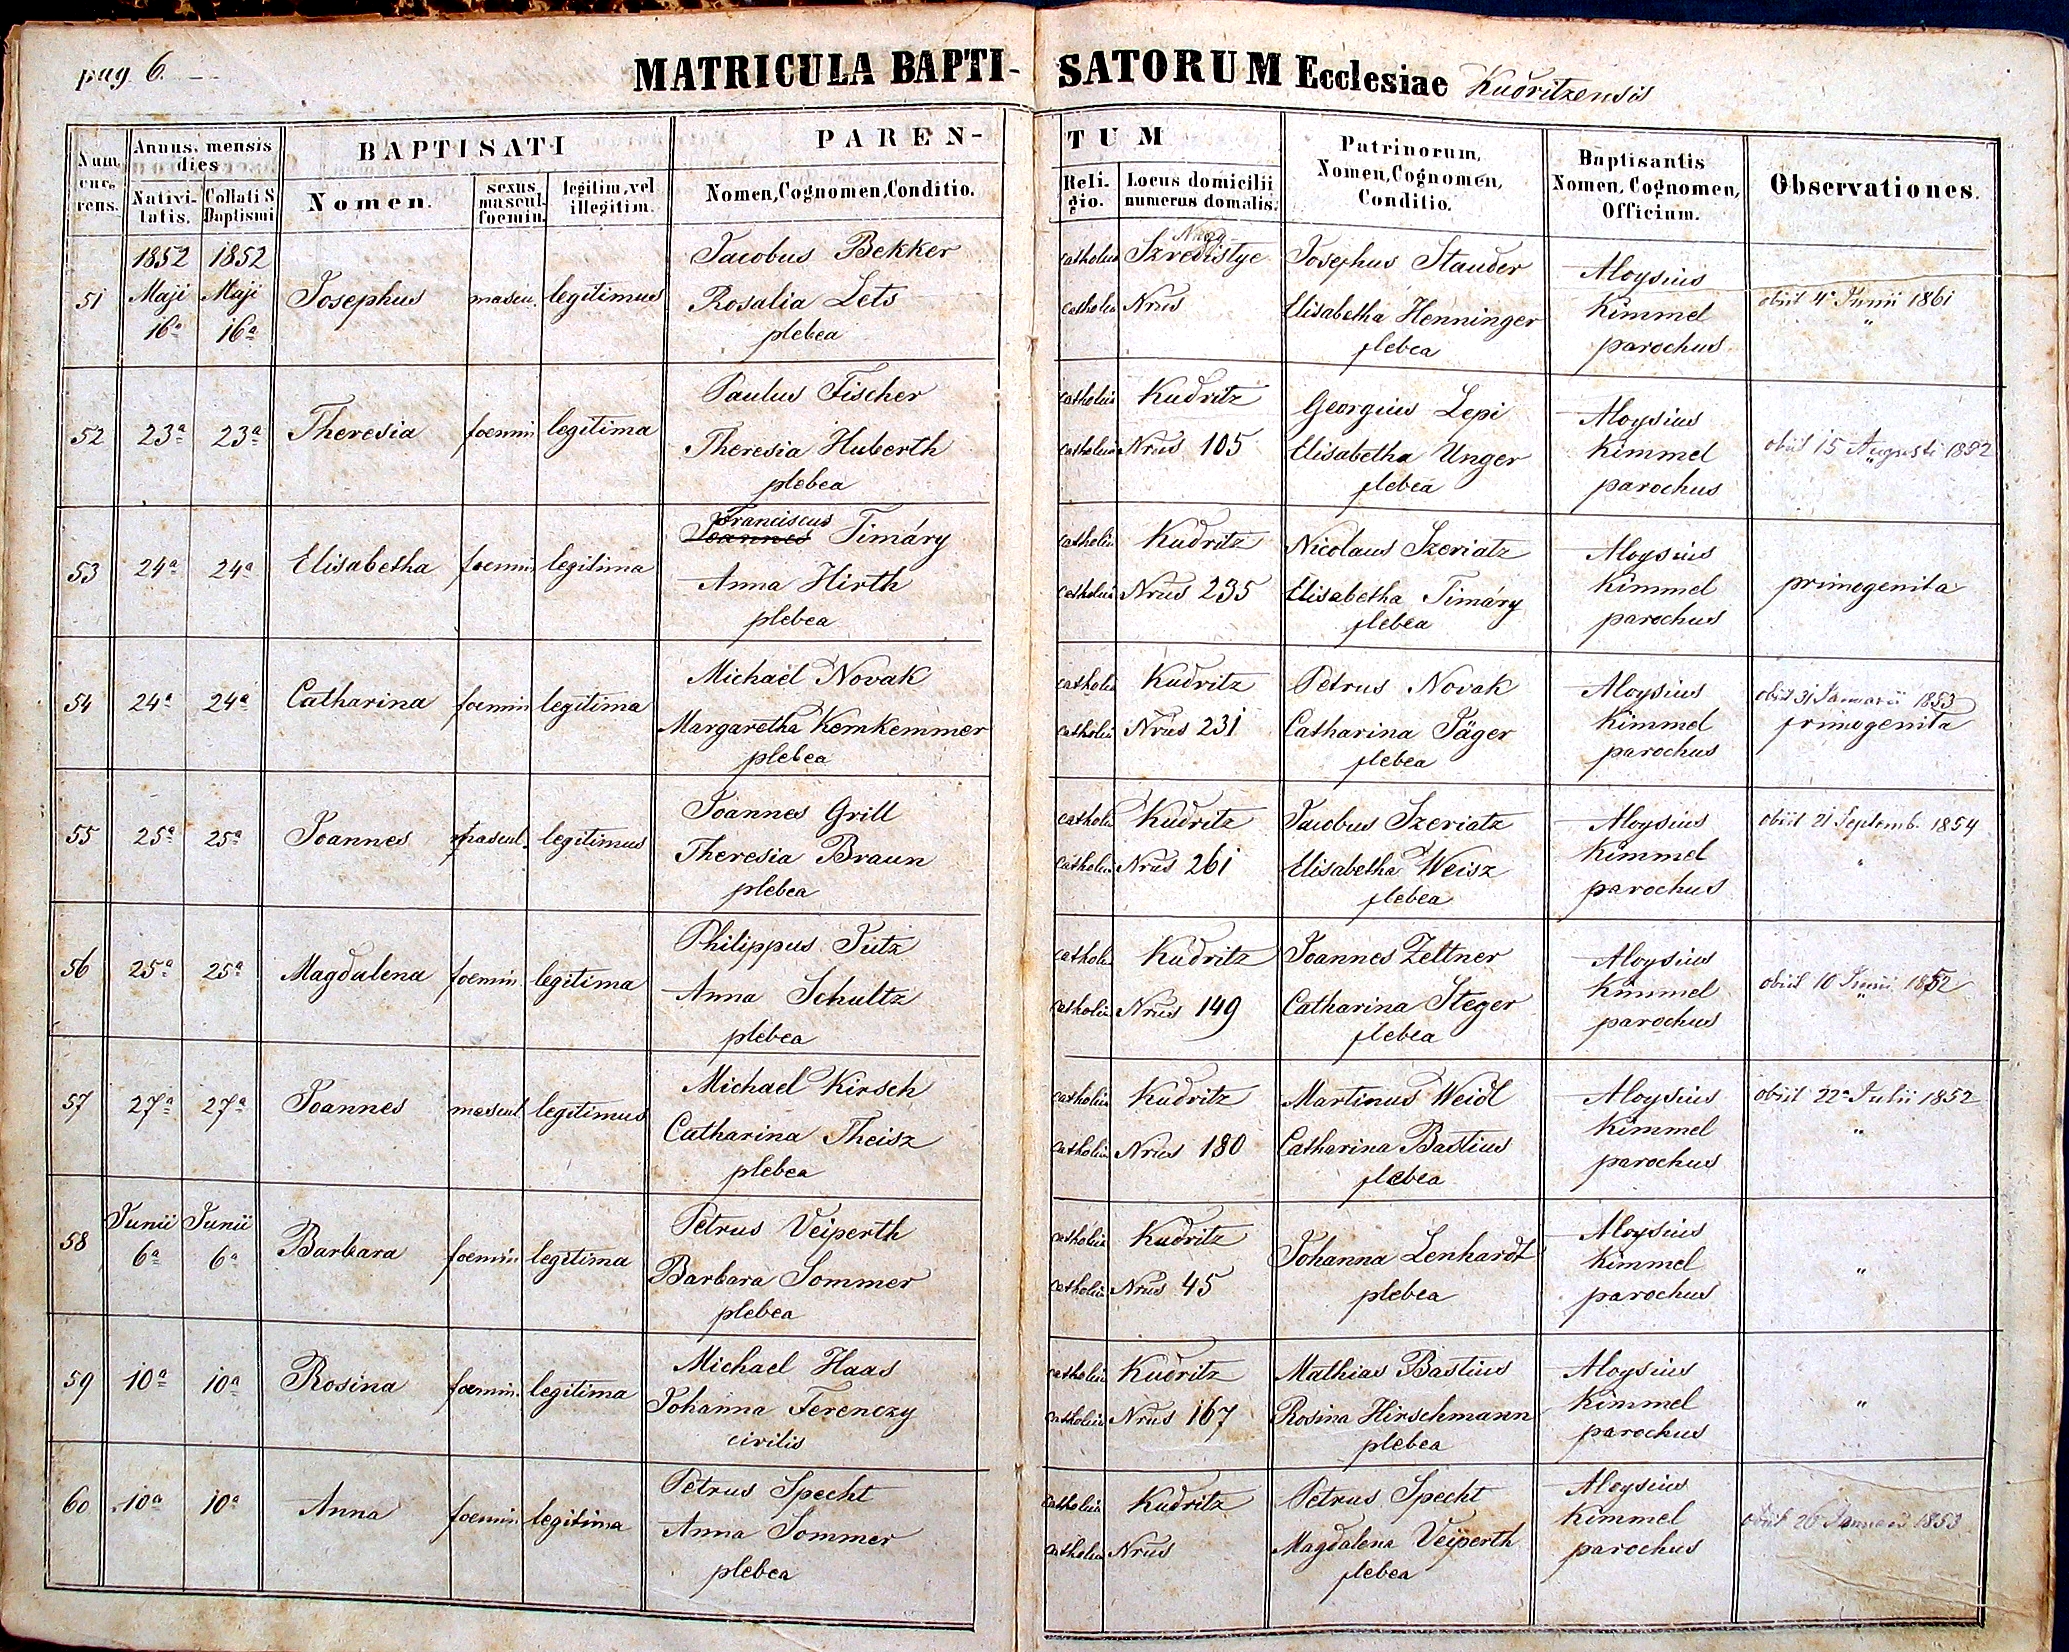 images/church_records/BIRTHS/1852-1870B/006